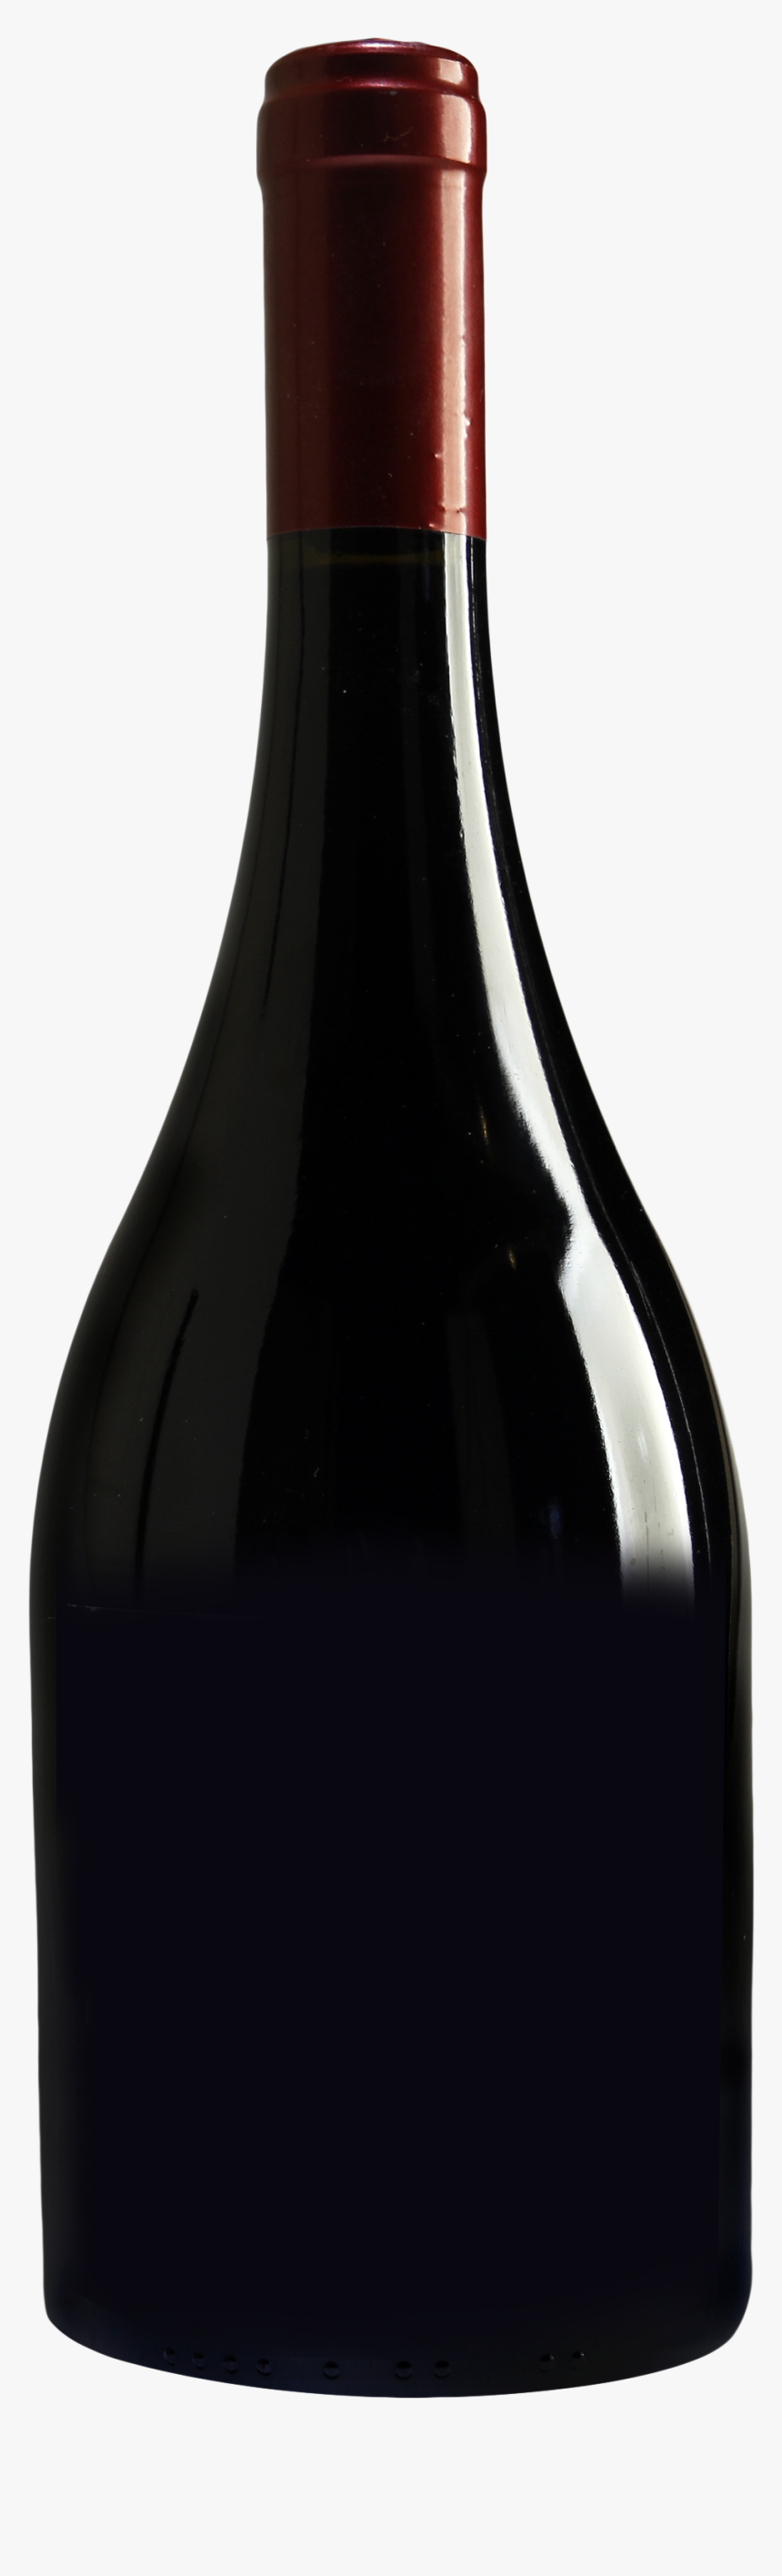 Download Pic Free Transparent - Wine Bottle Png Transparent, Png Download, Free Download